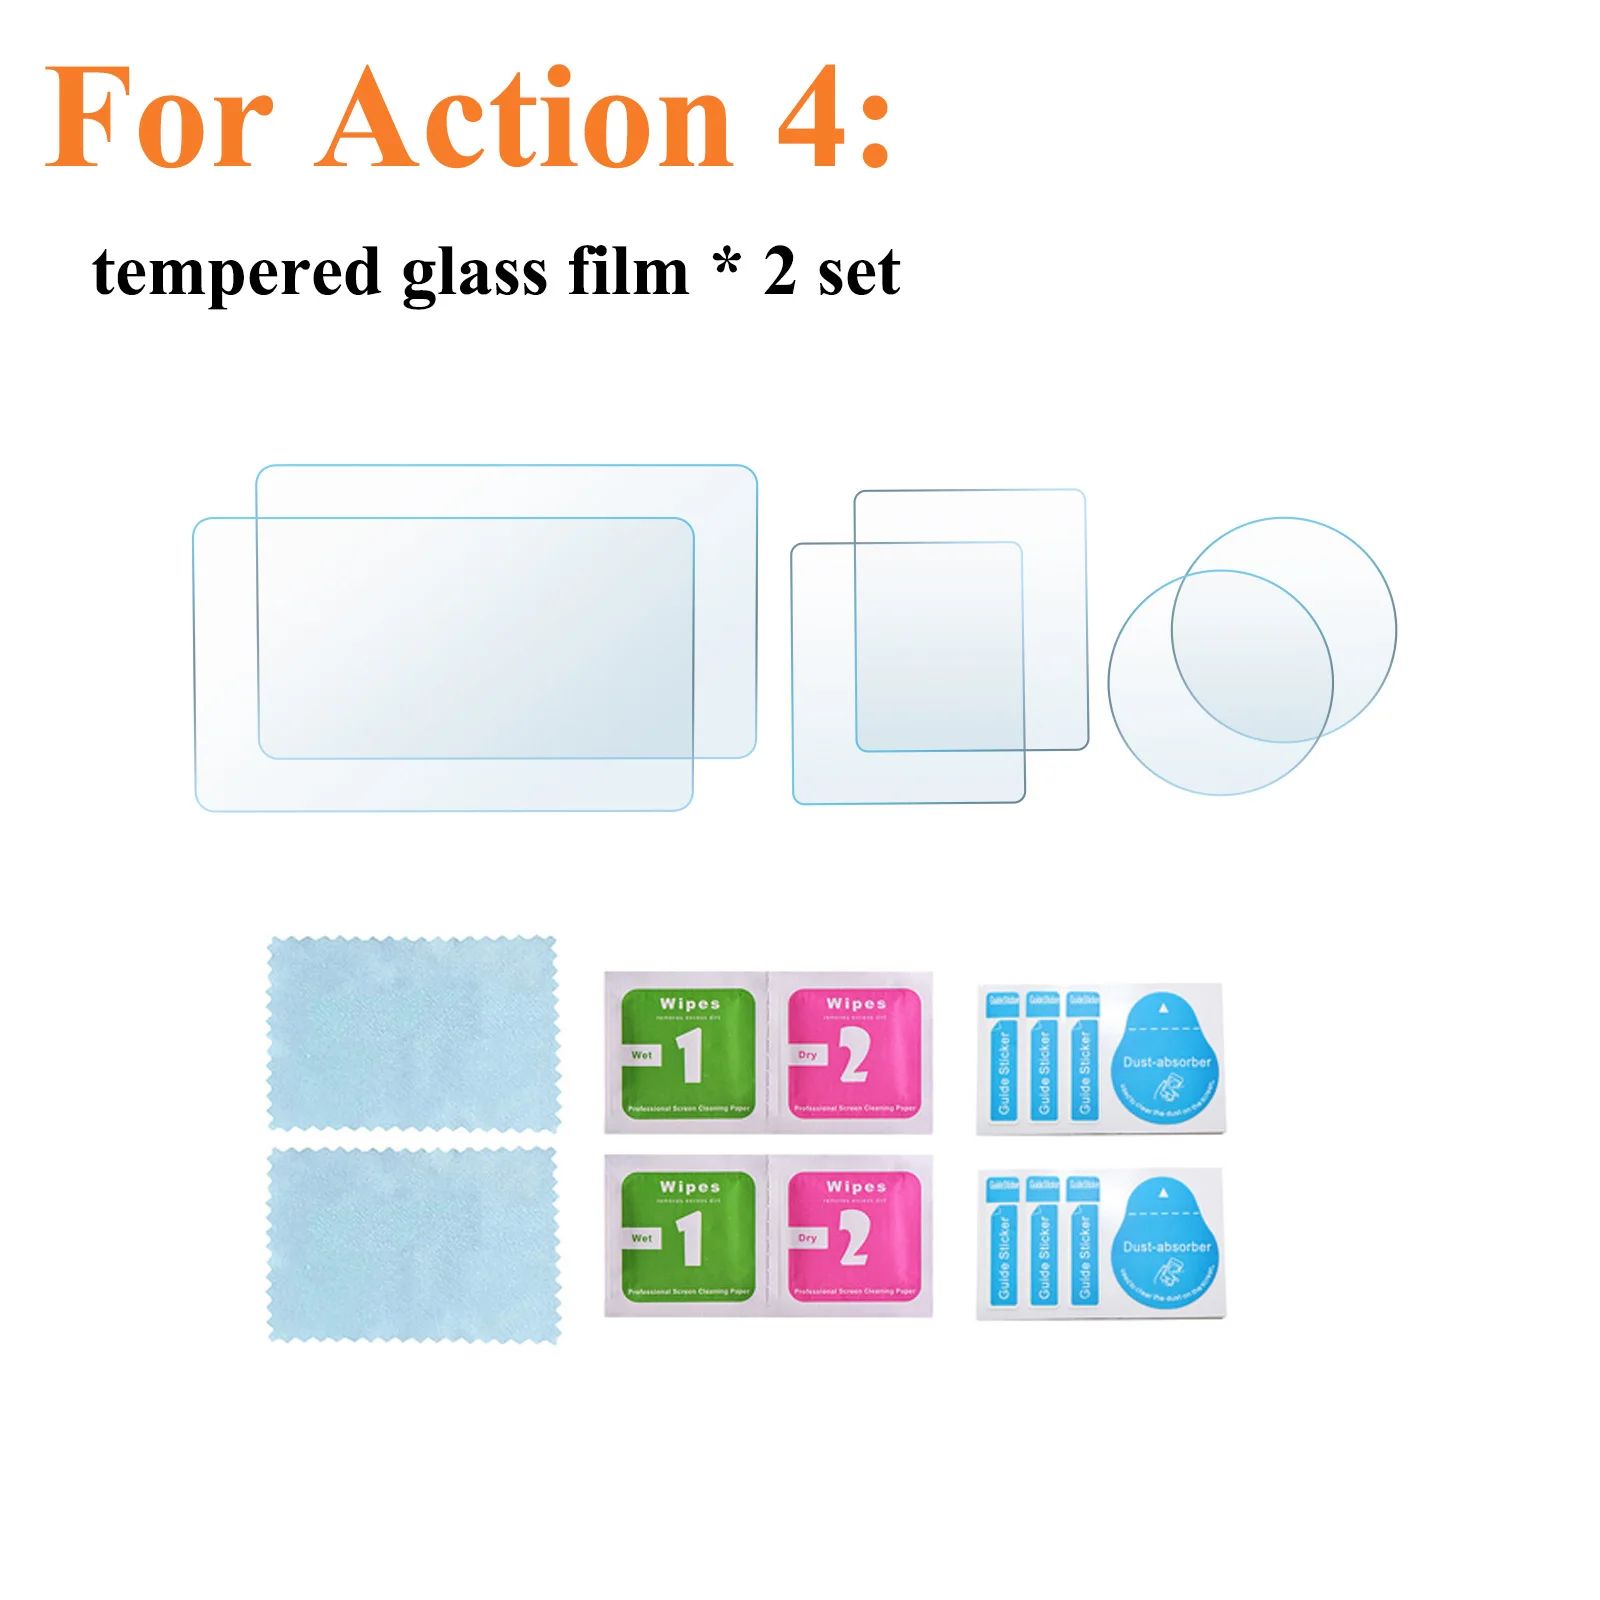 Färg: Action 4 Film 2 Set